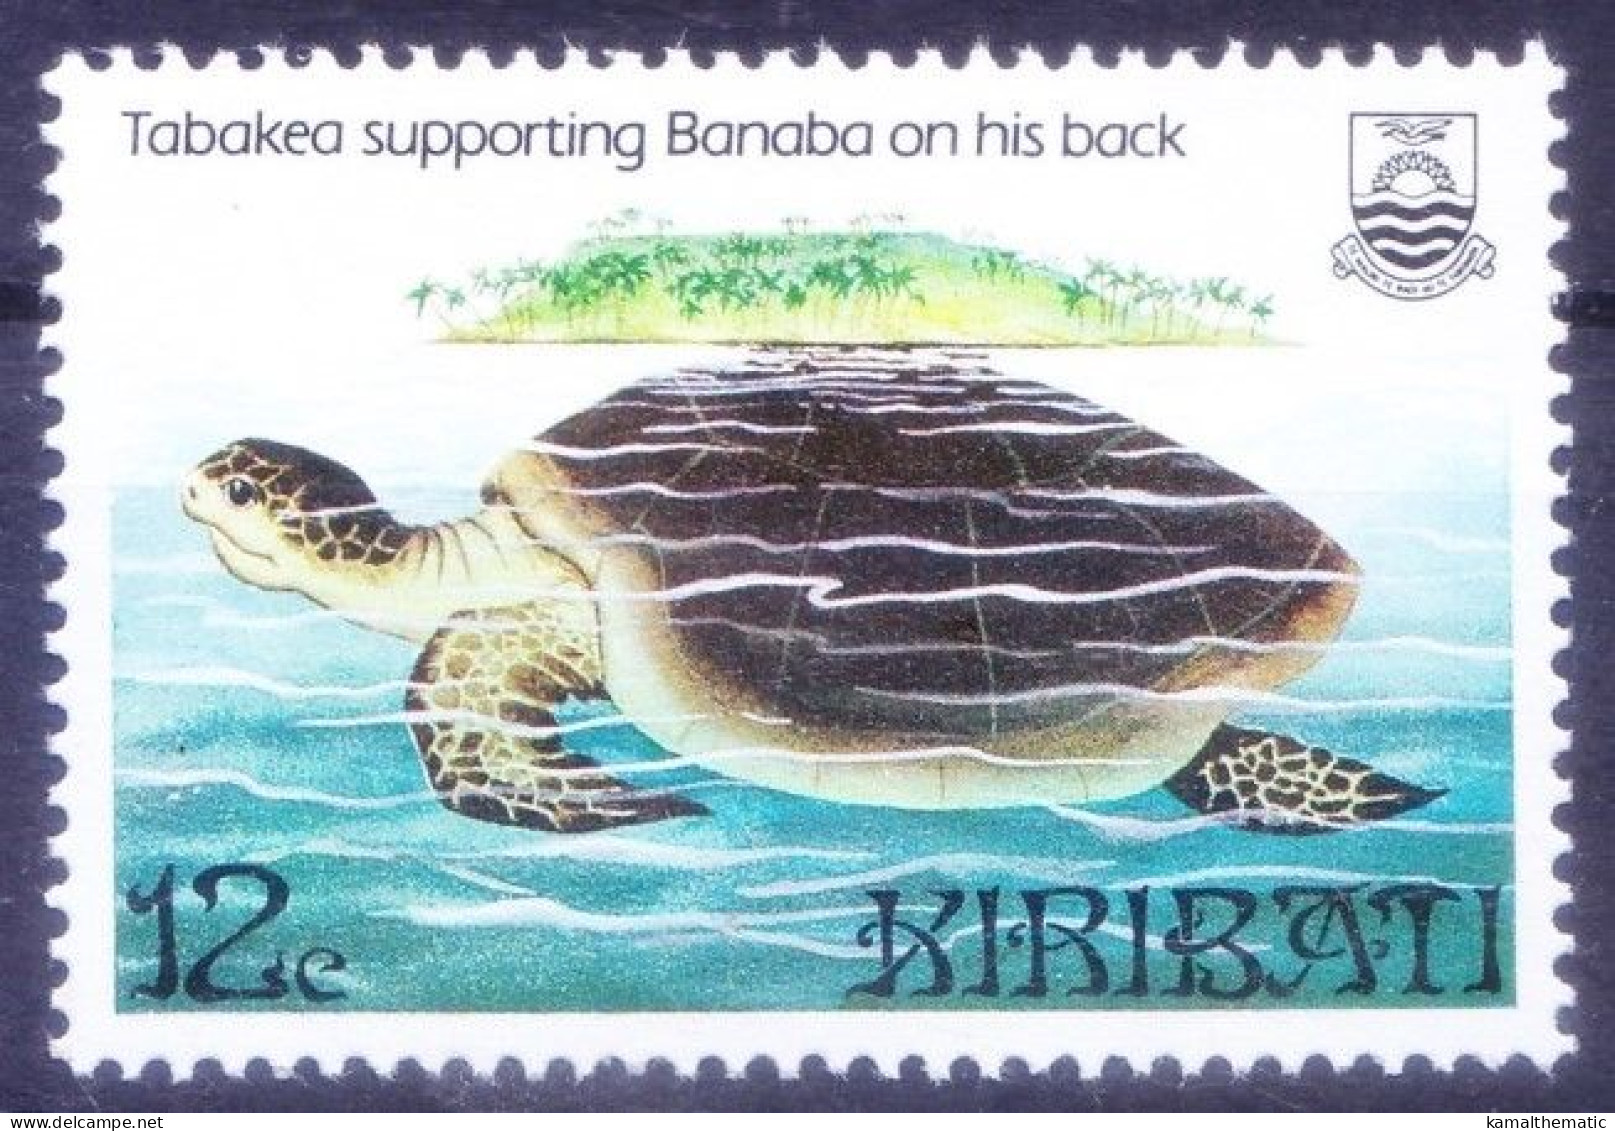 Kiribati 1984 MNH, Tabakea The Turtle God, Supporting Banaba Island On Back. - Tortugas